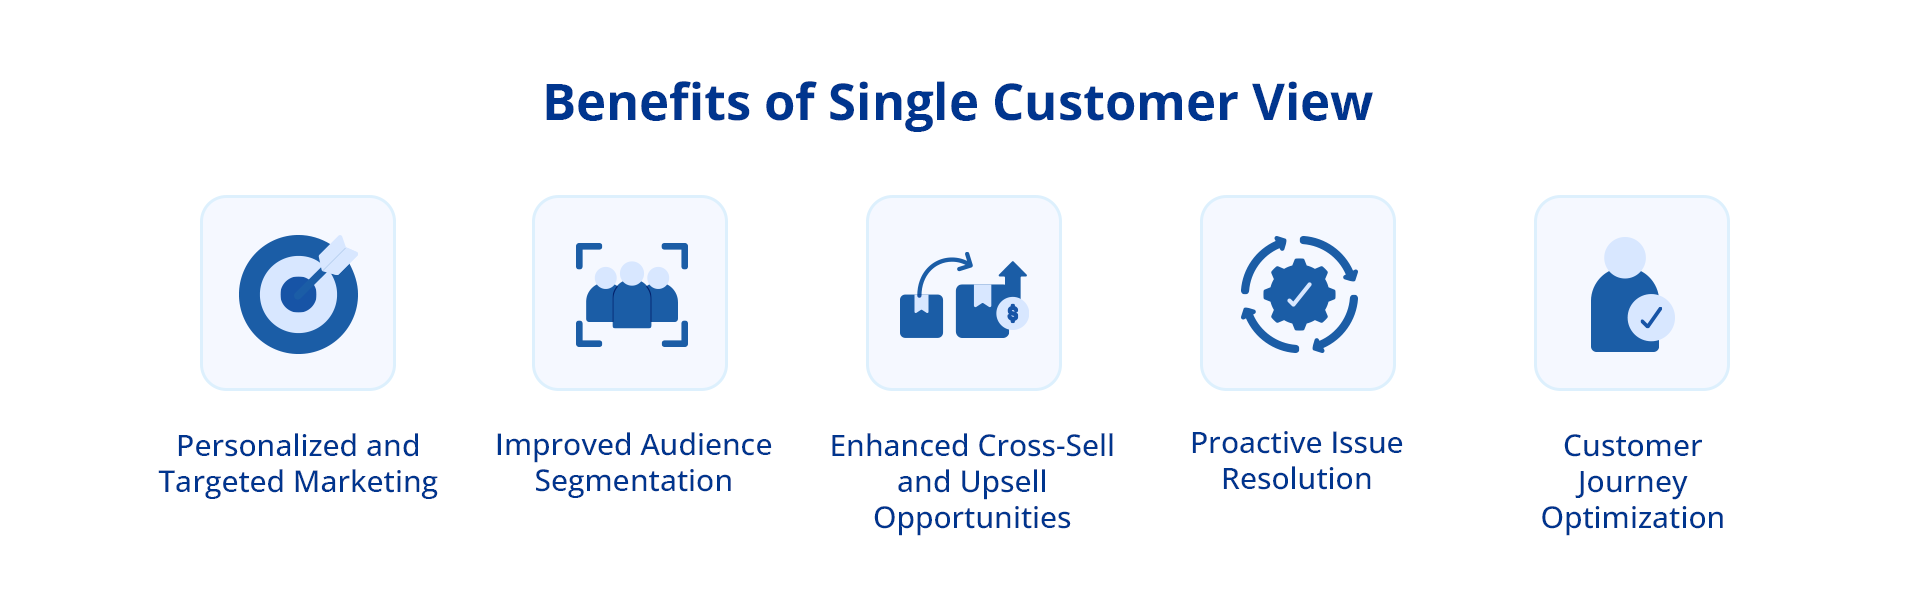 Benefits of Single Customer View